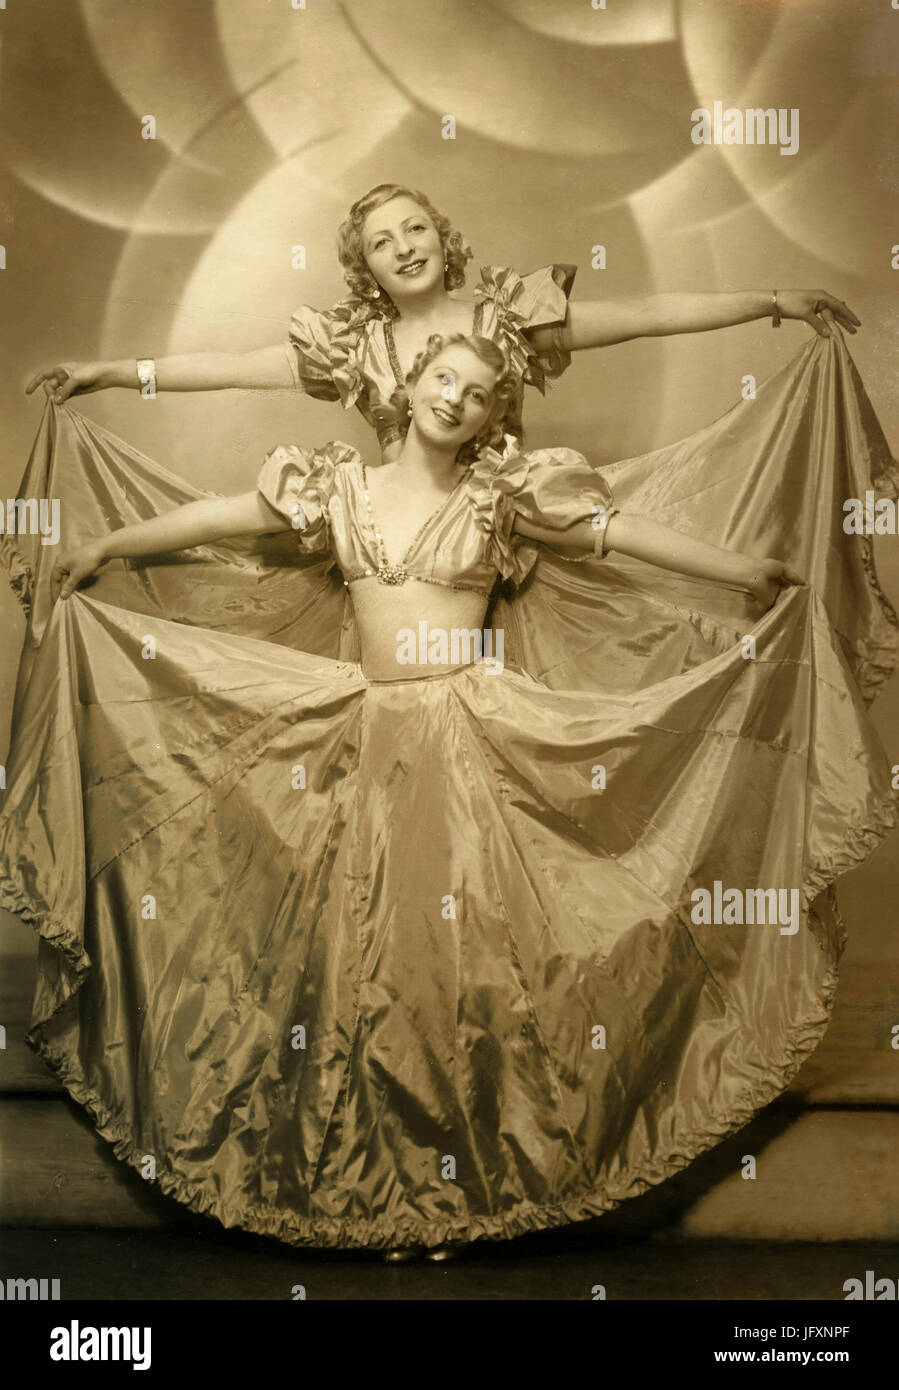 Iris Sisters show, Wien 1930s Stock Photo